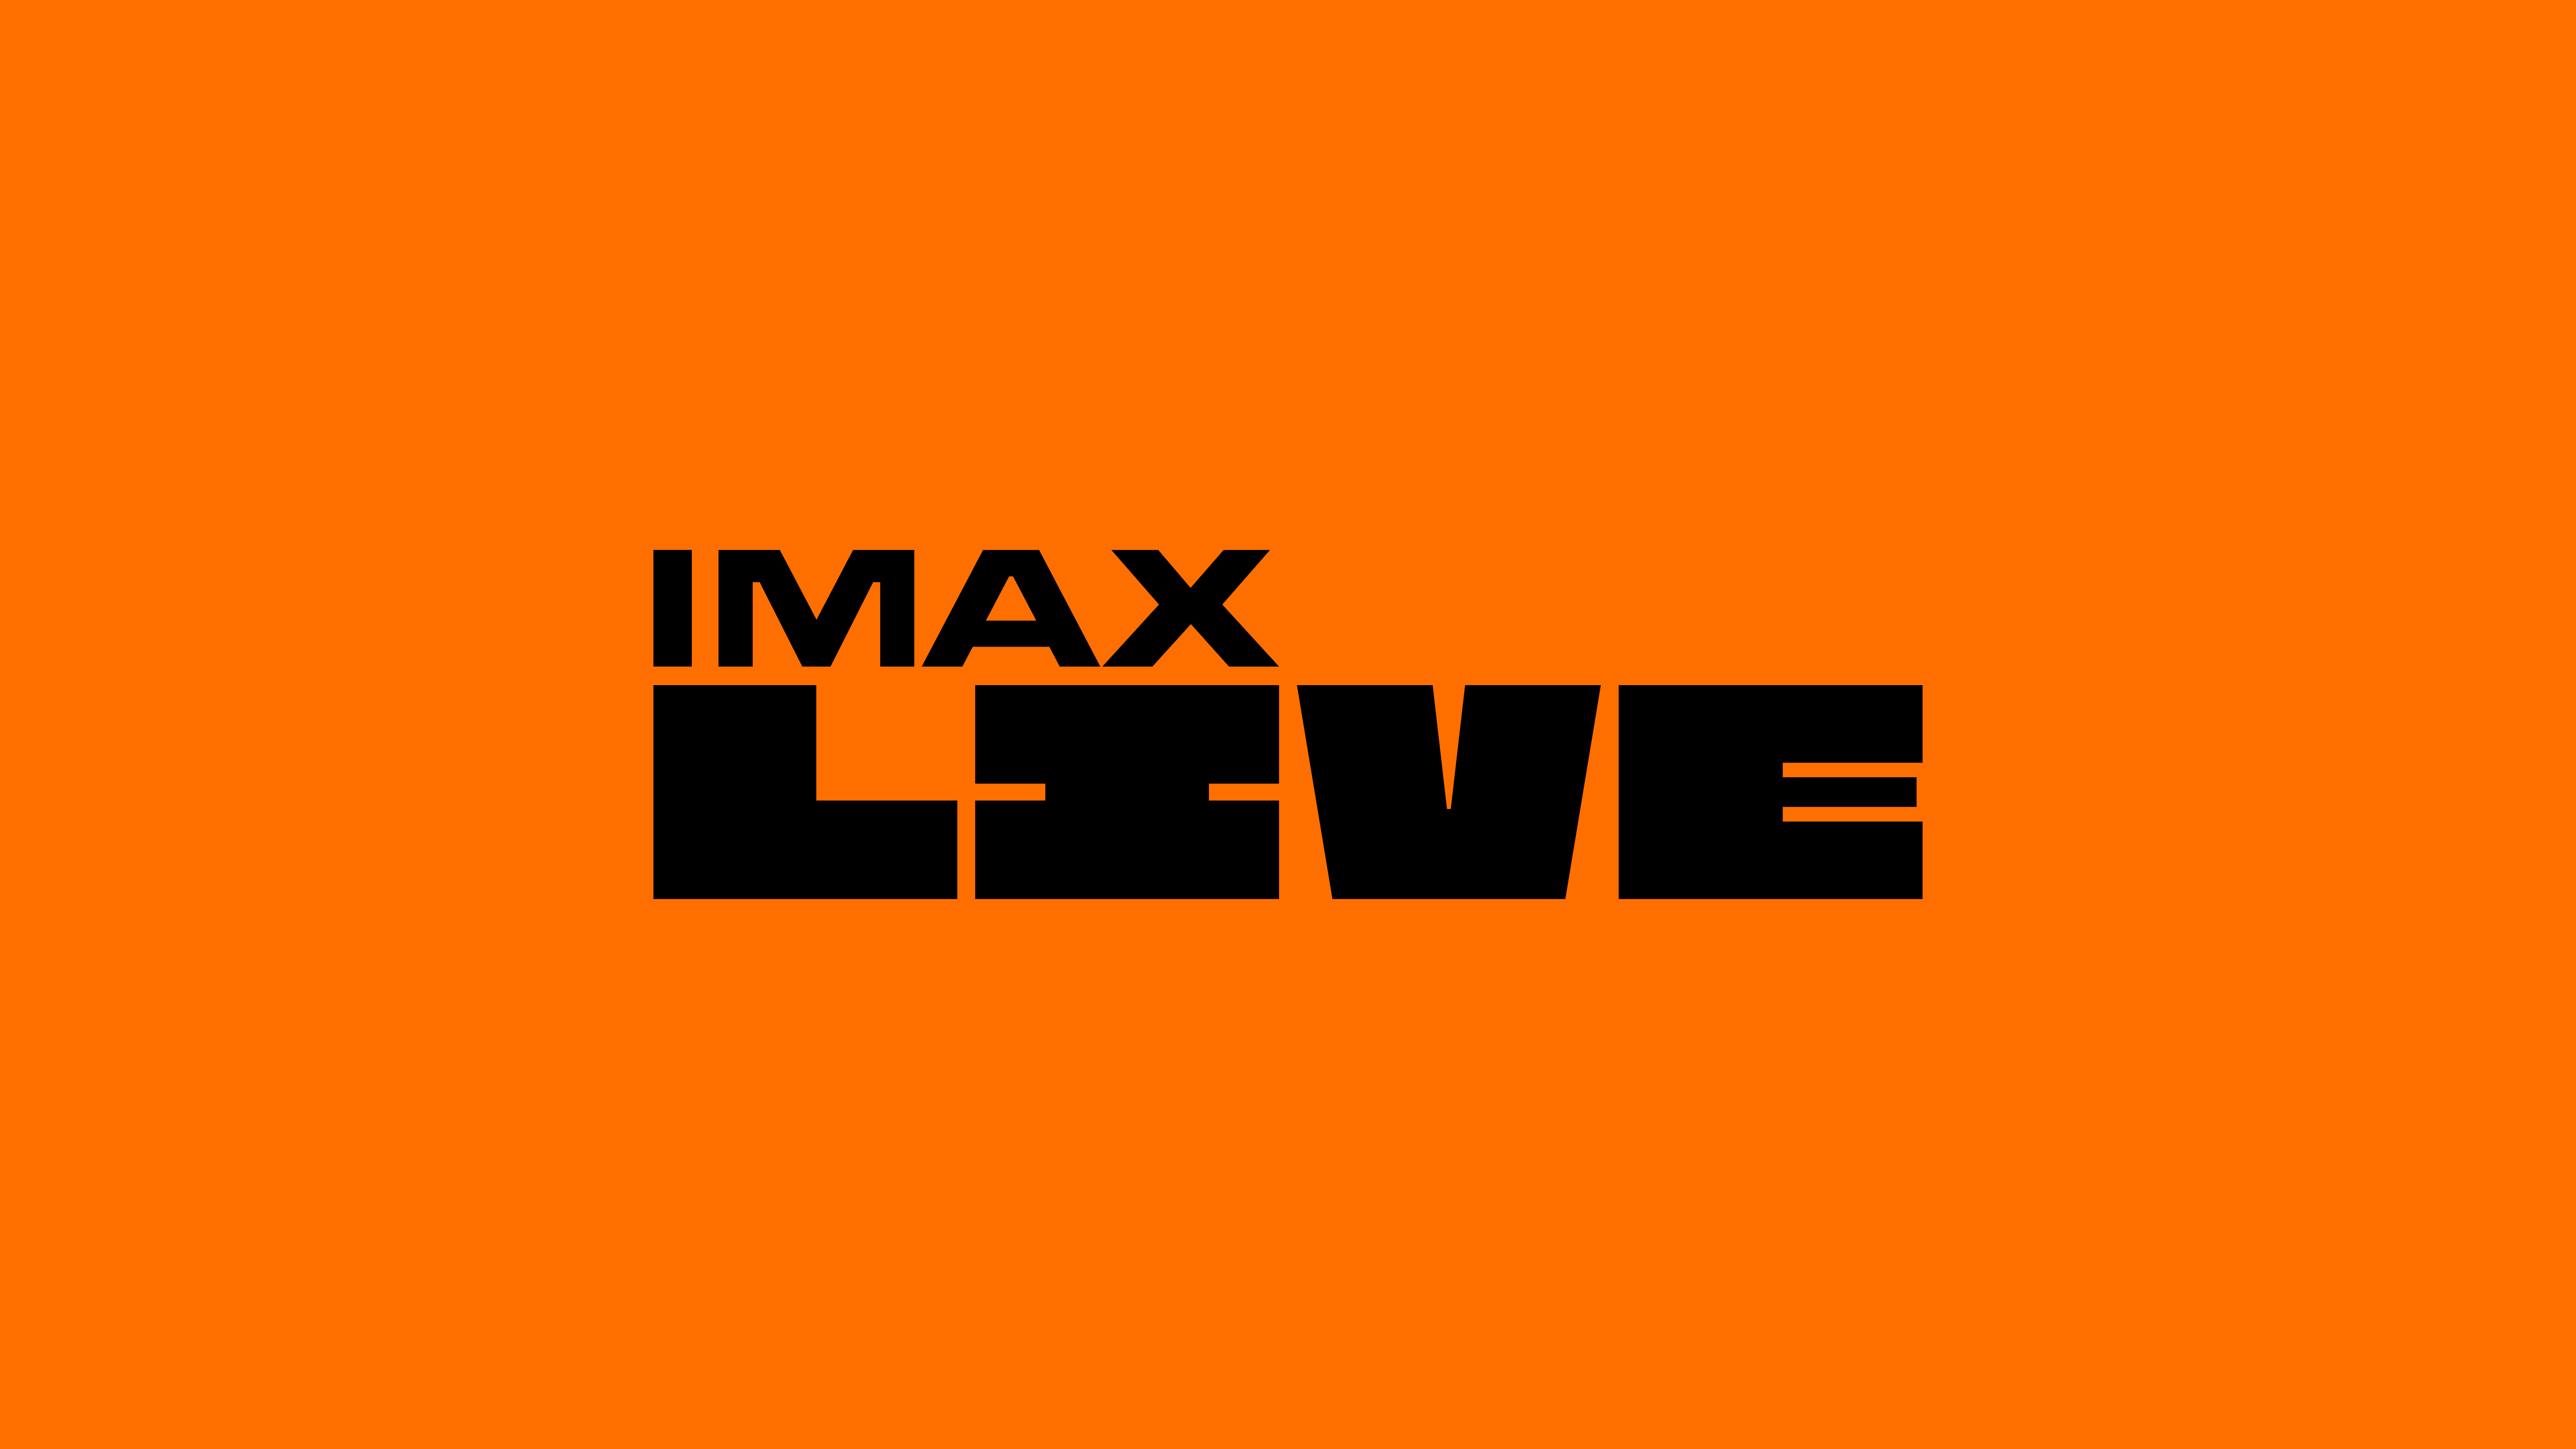 IMAX Logo editorial stock image. Image of technology - 301040649